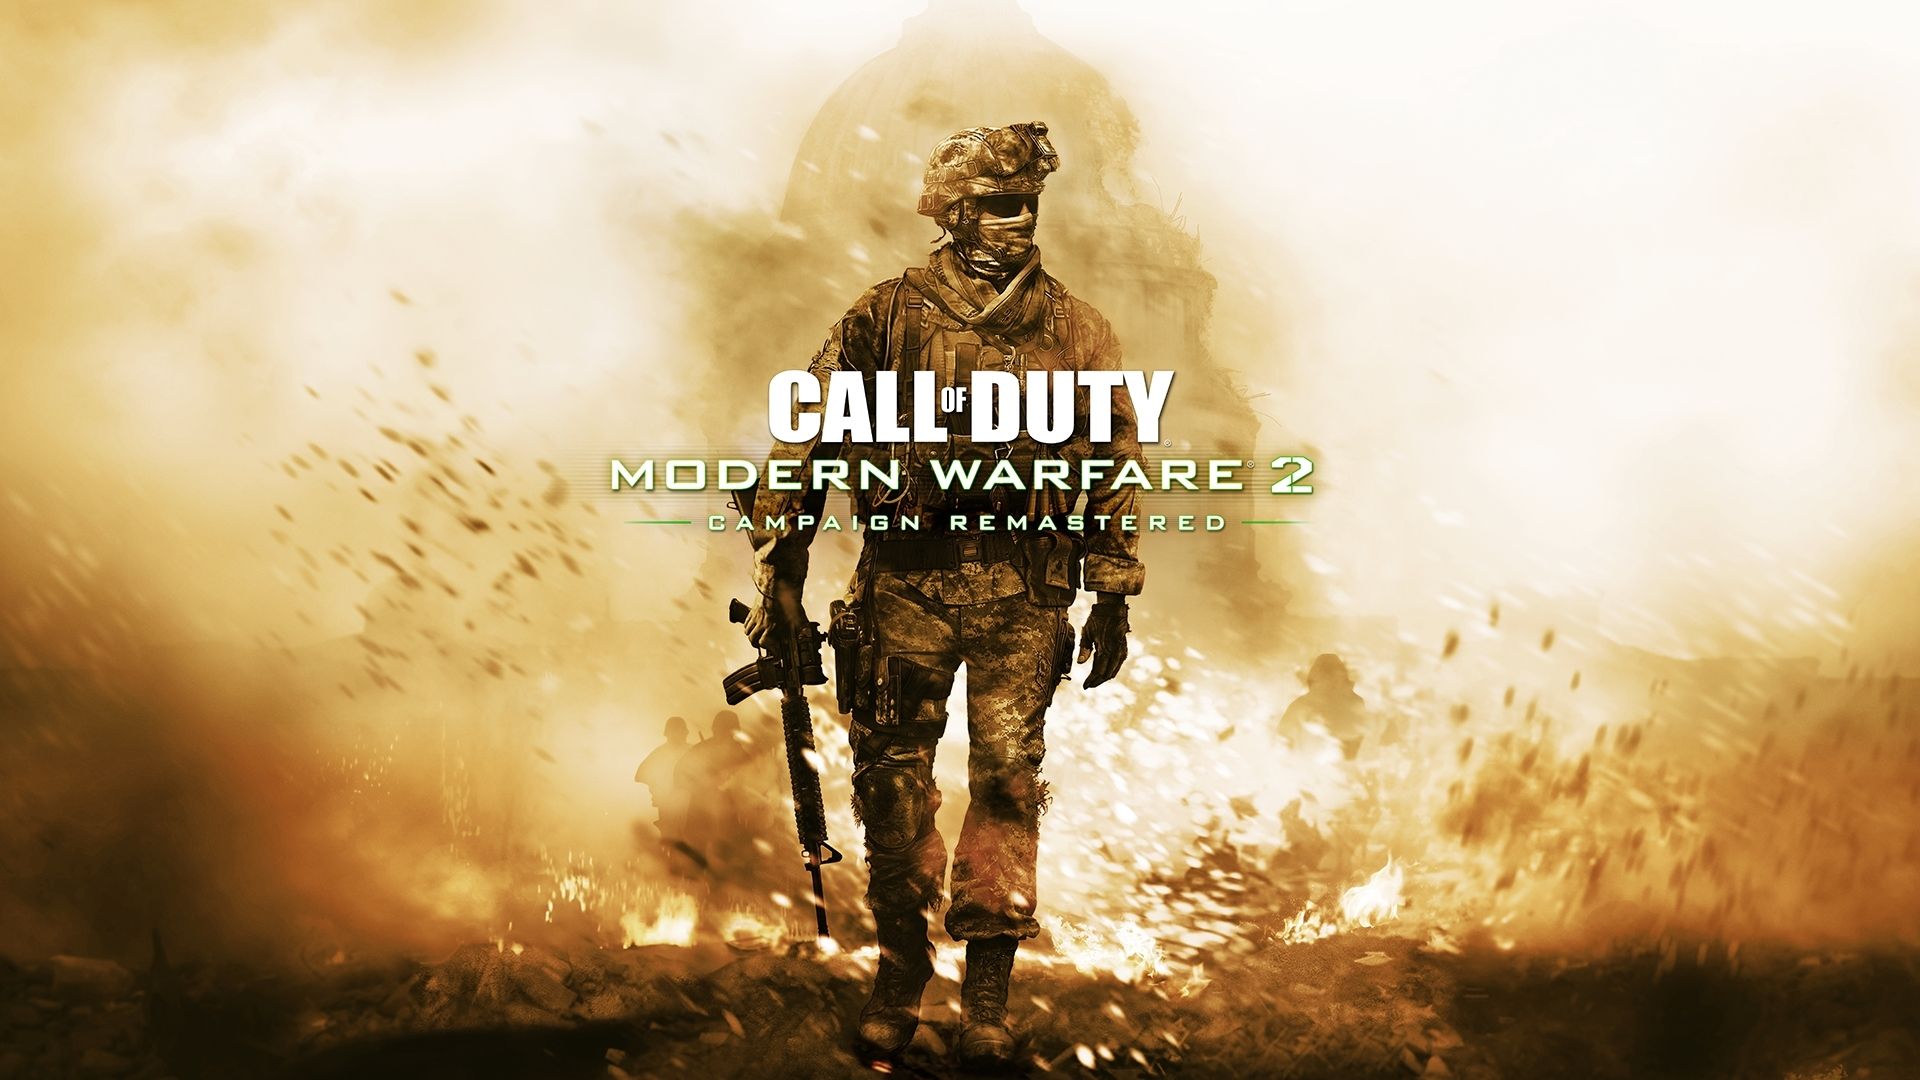 Call of Duty Modern Warfare 2 Campaign Remastered Wallpaper, HD